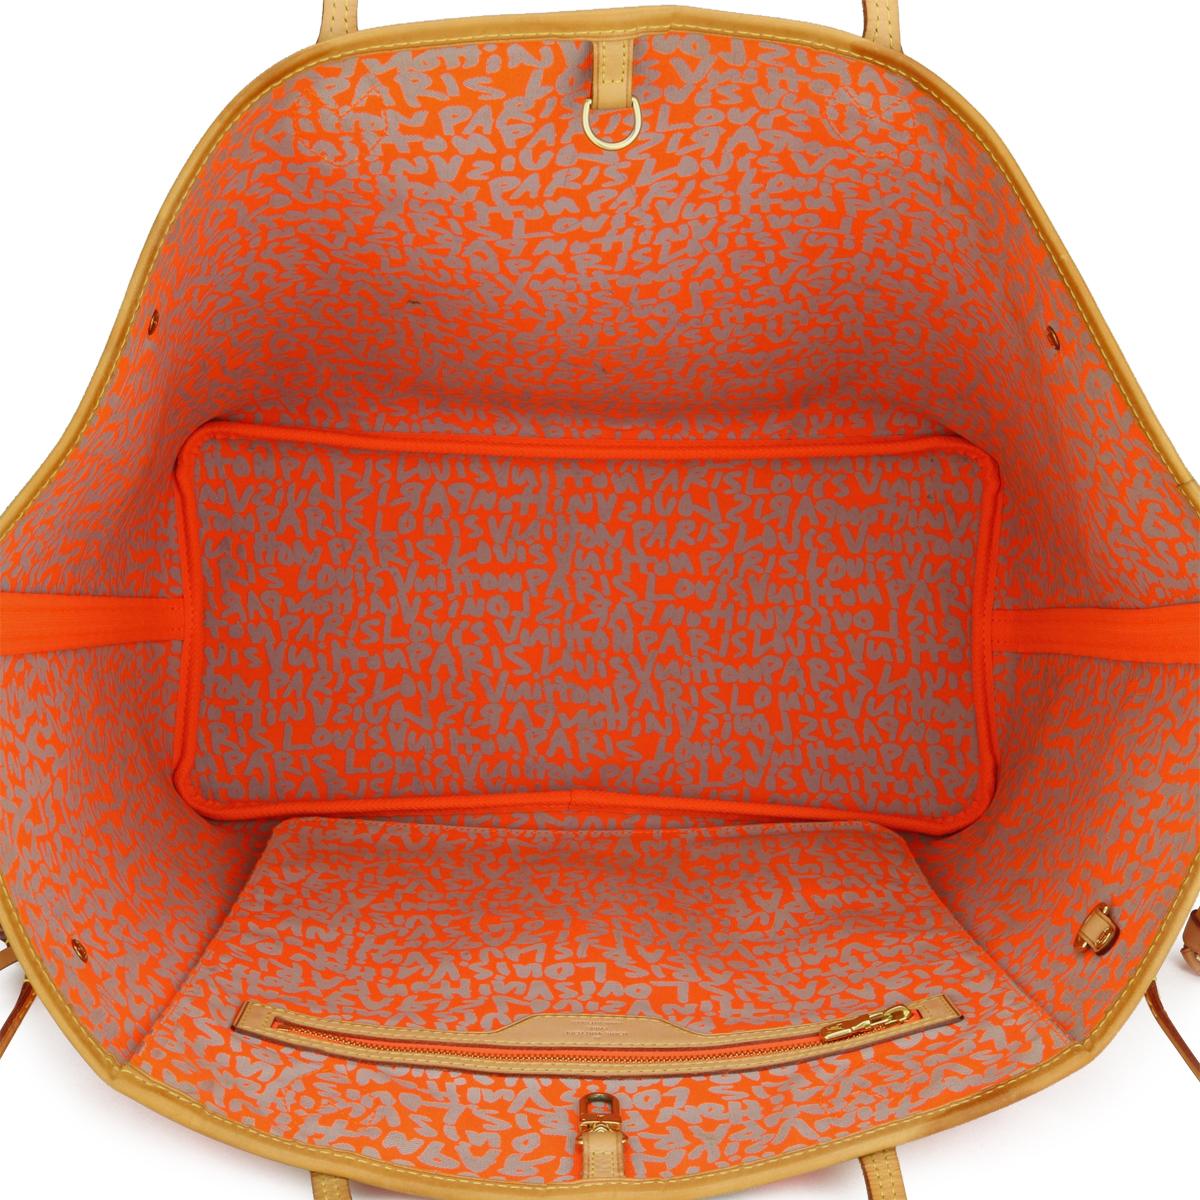 Louis Vuitton Neverfull GM Bag in Monogram Graffiti with Orange Interior 2009 12